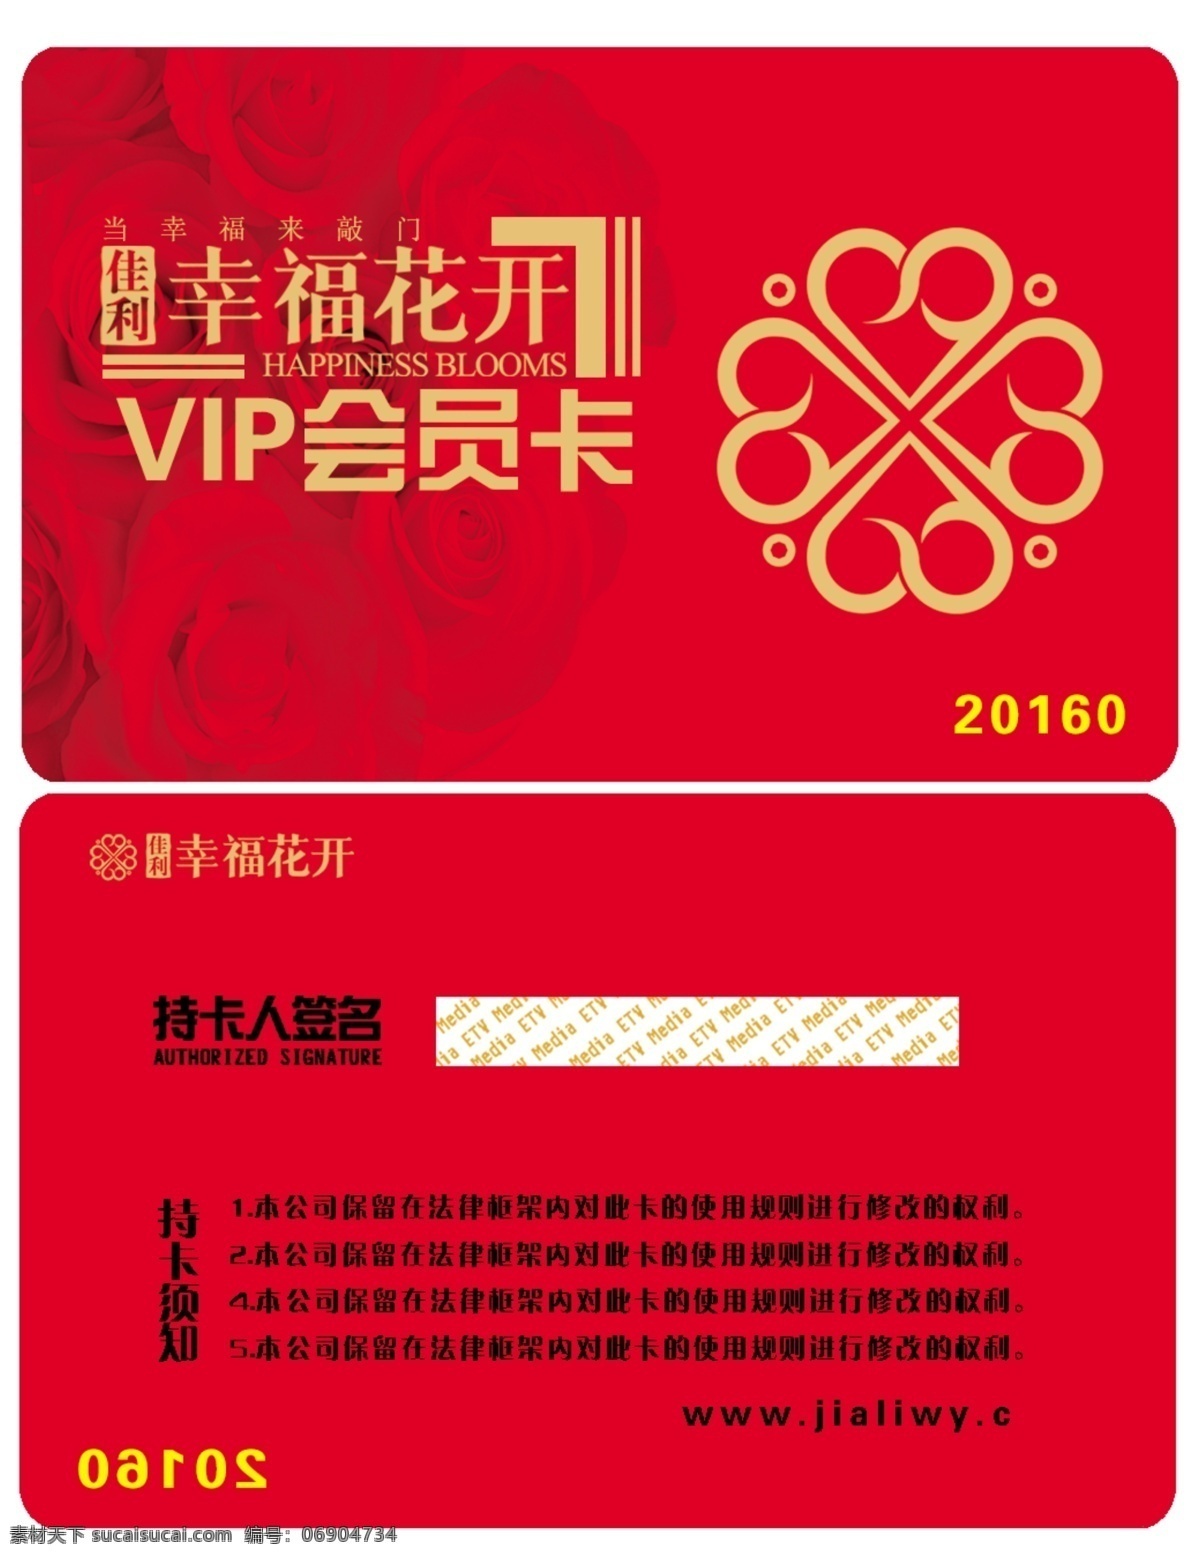 vip 卡 vip卡设计 背景 广告设计模板 红色 花纹 会员卡 名片卡片 源文件 名片卡 广告设计名片